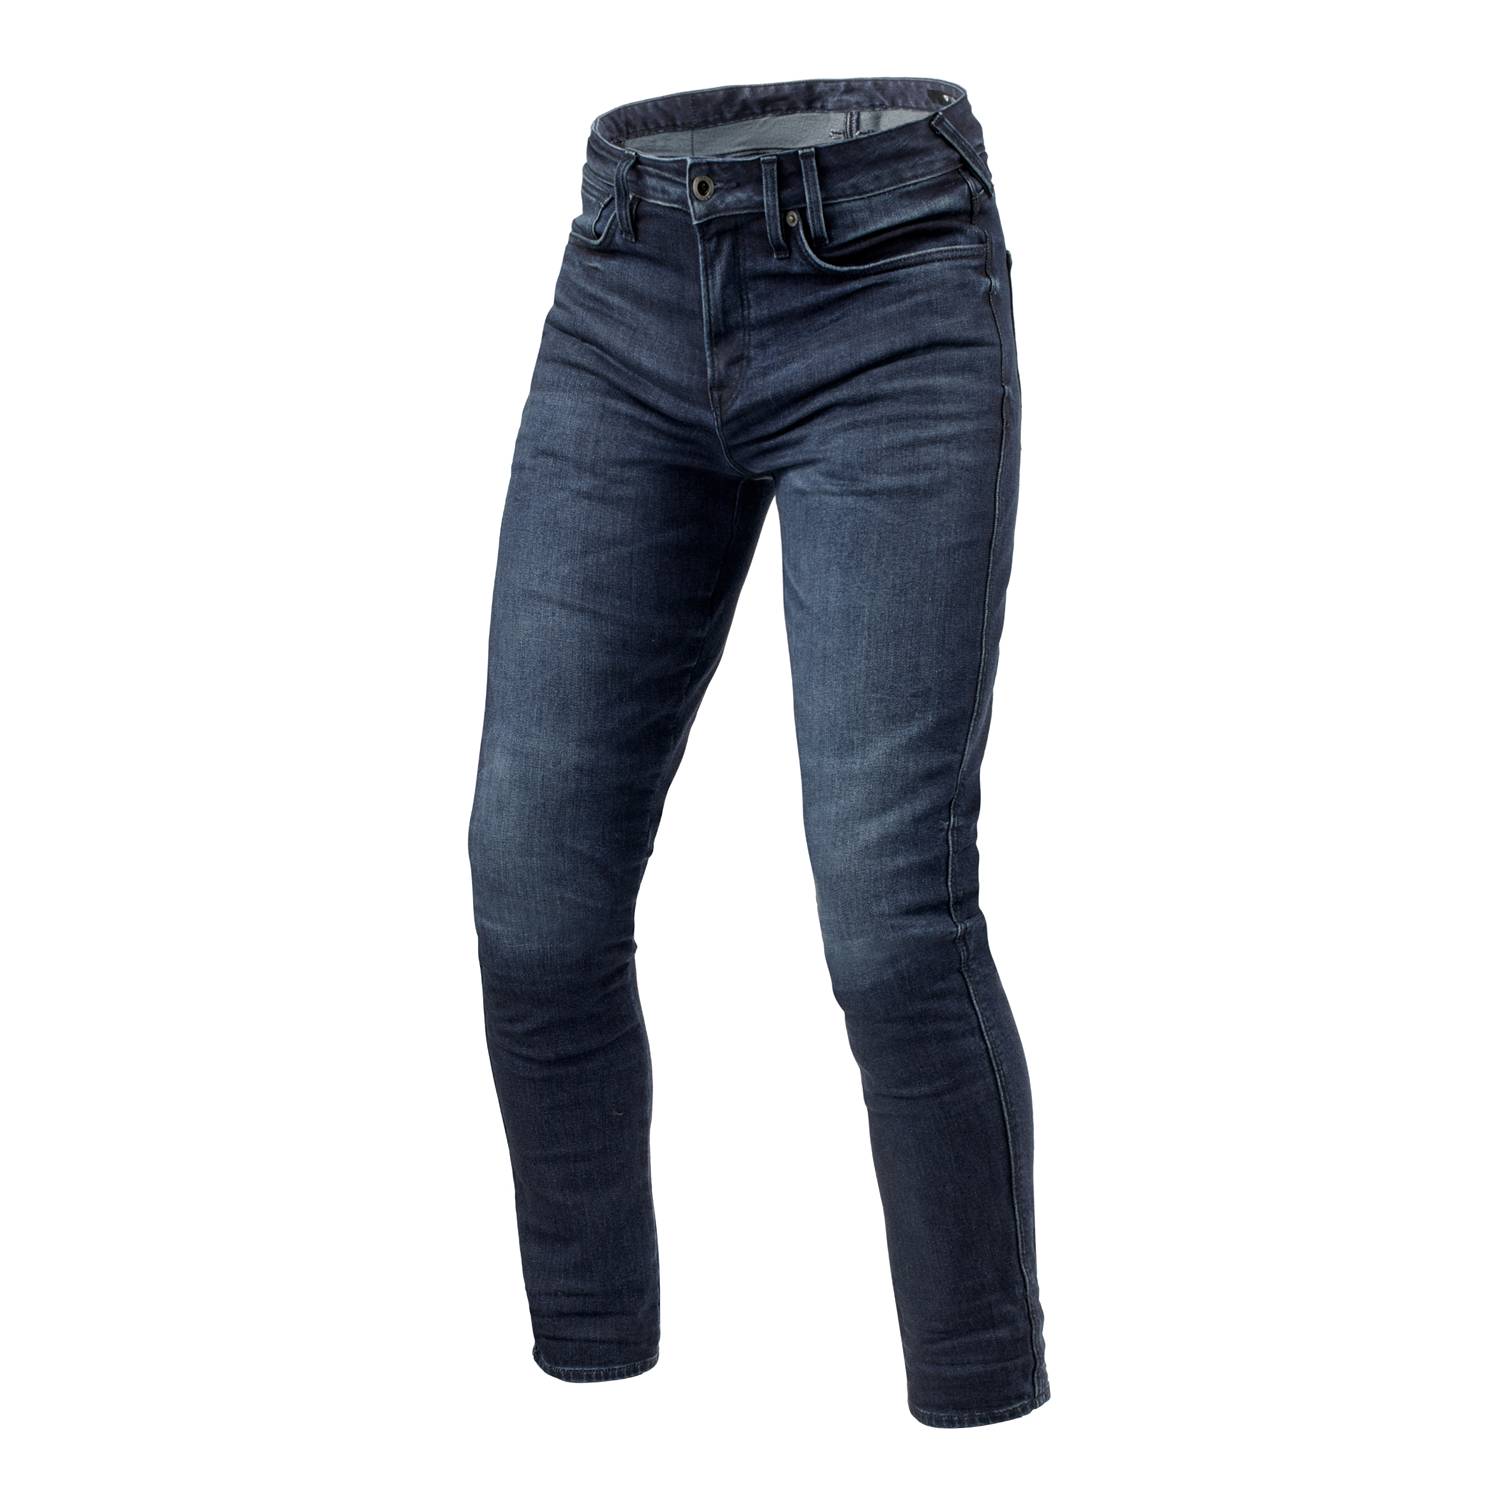 Image of REV'IT! Jeans Carlin SK Dark Blue Used L32 Motorcycle Jeans Talla L32/W31